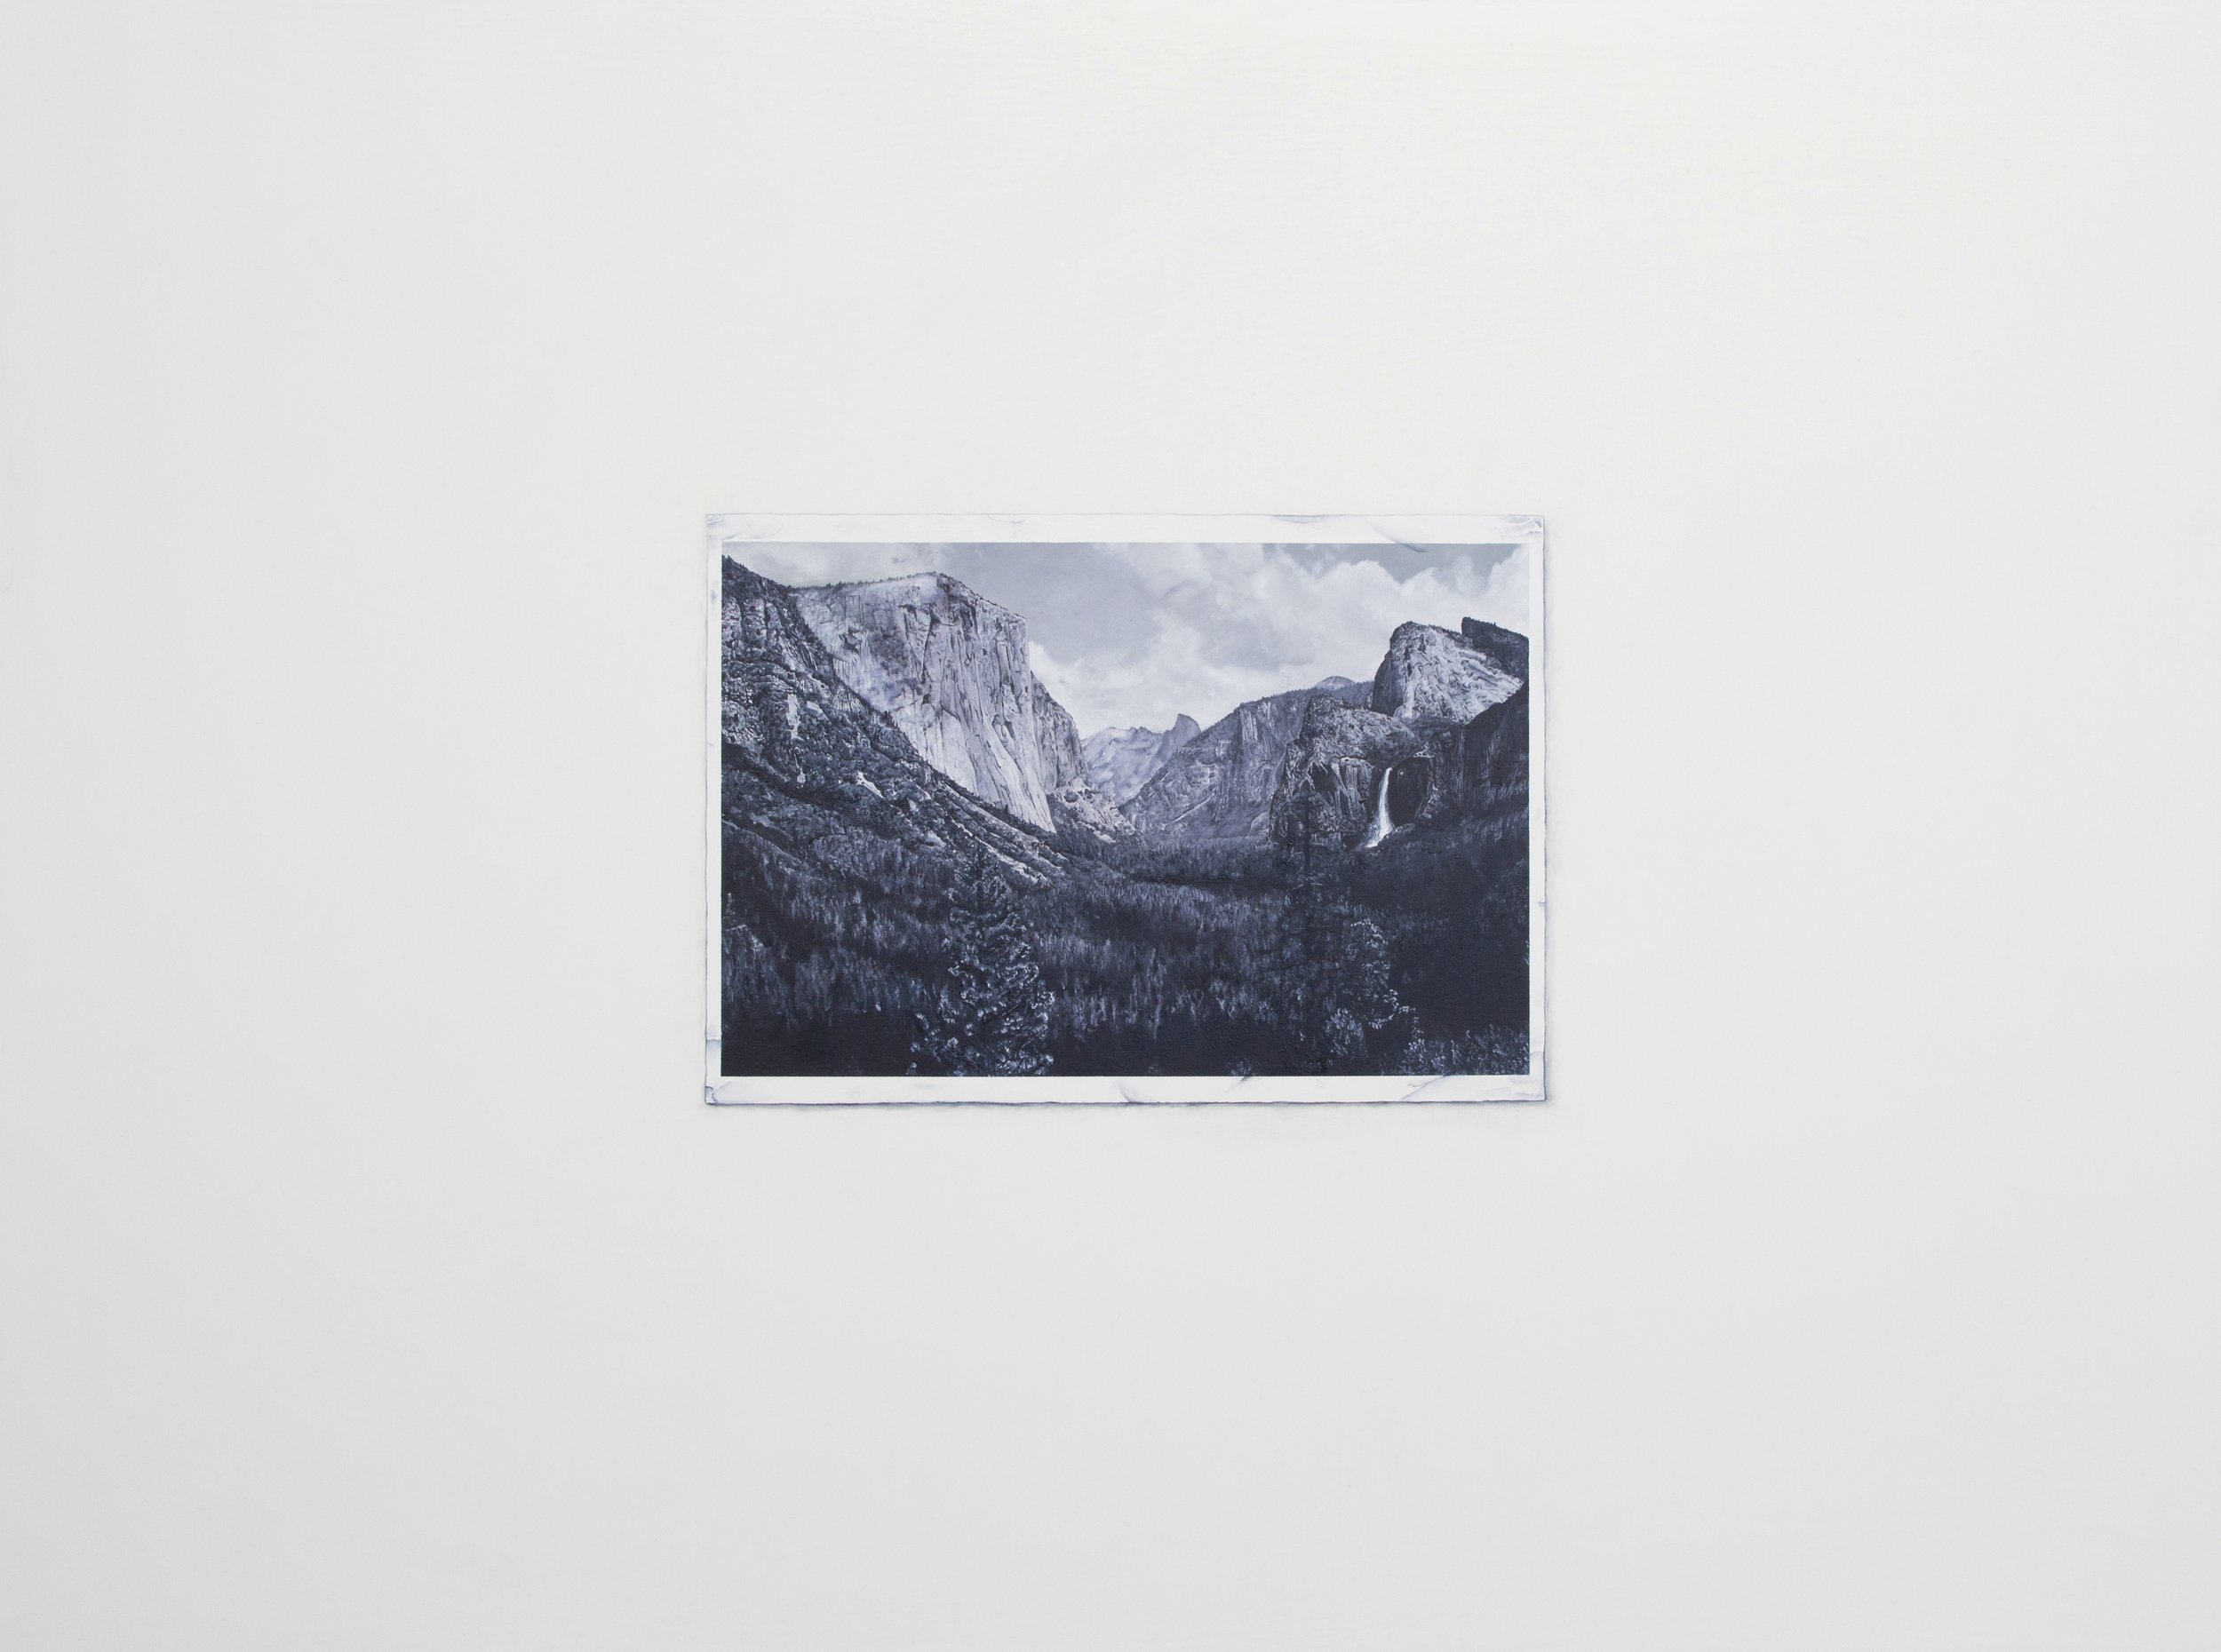  Yosemite    oil on panel    60 x 80 cm    2016    private collection 